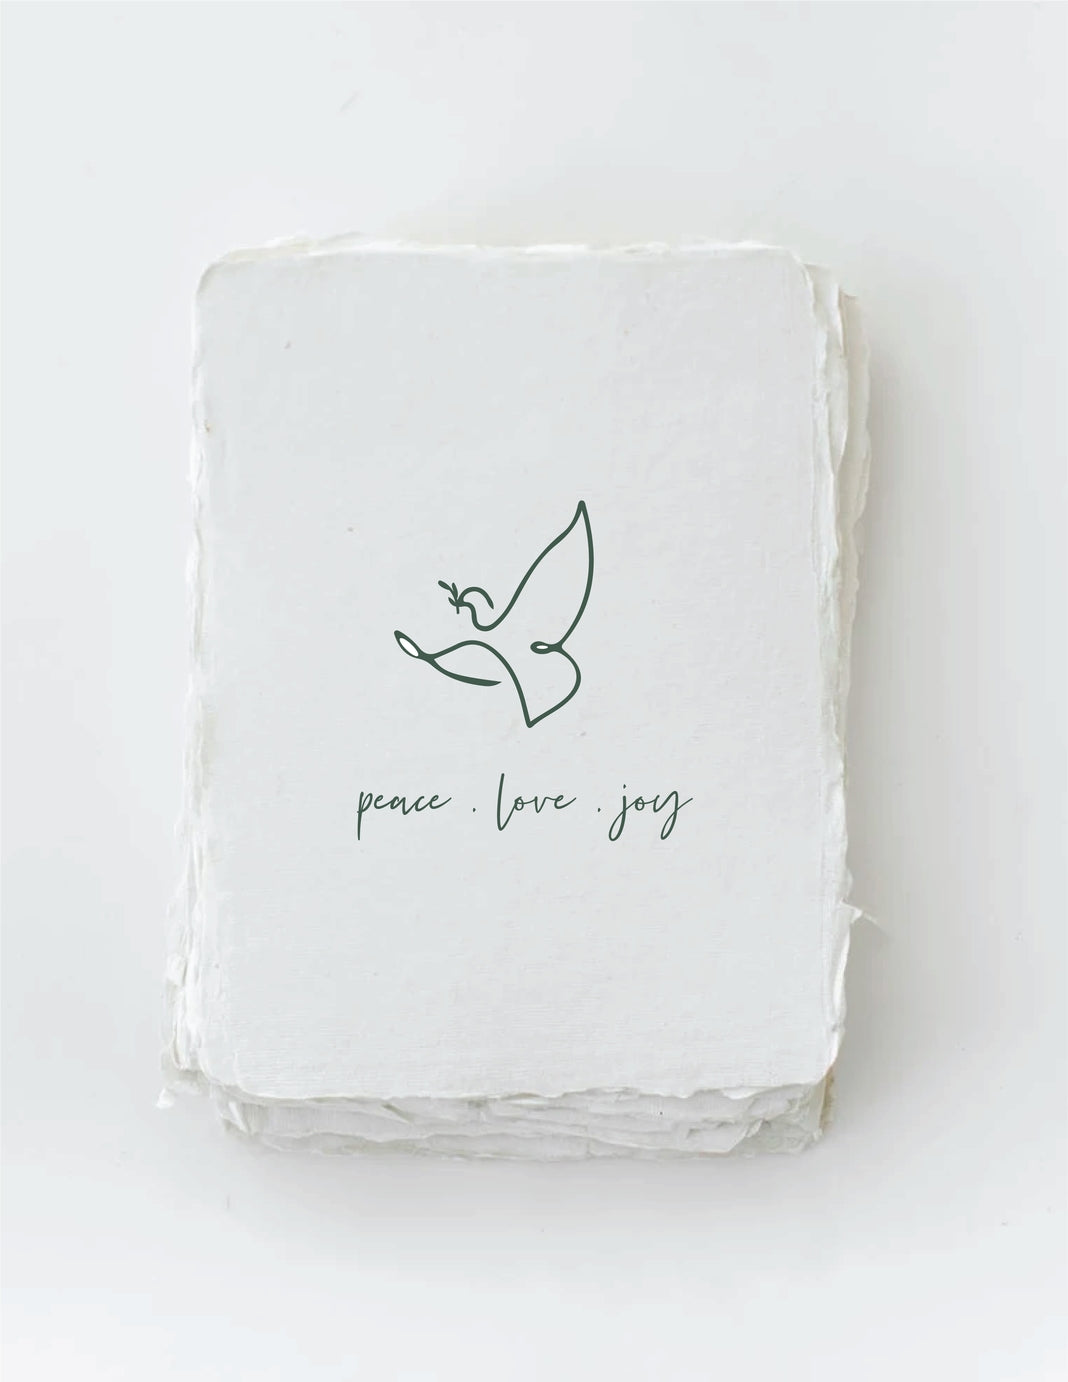 Peace. Love. Joy - Dove Christmas Holiday Greeting Card